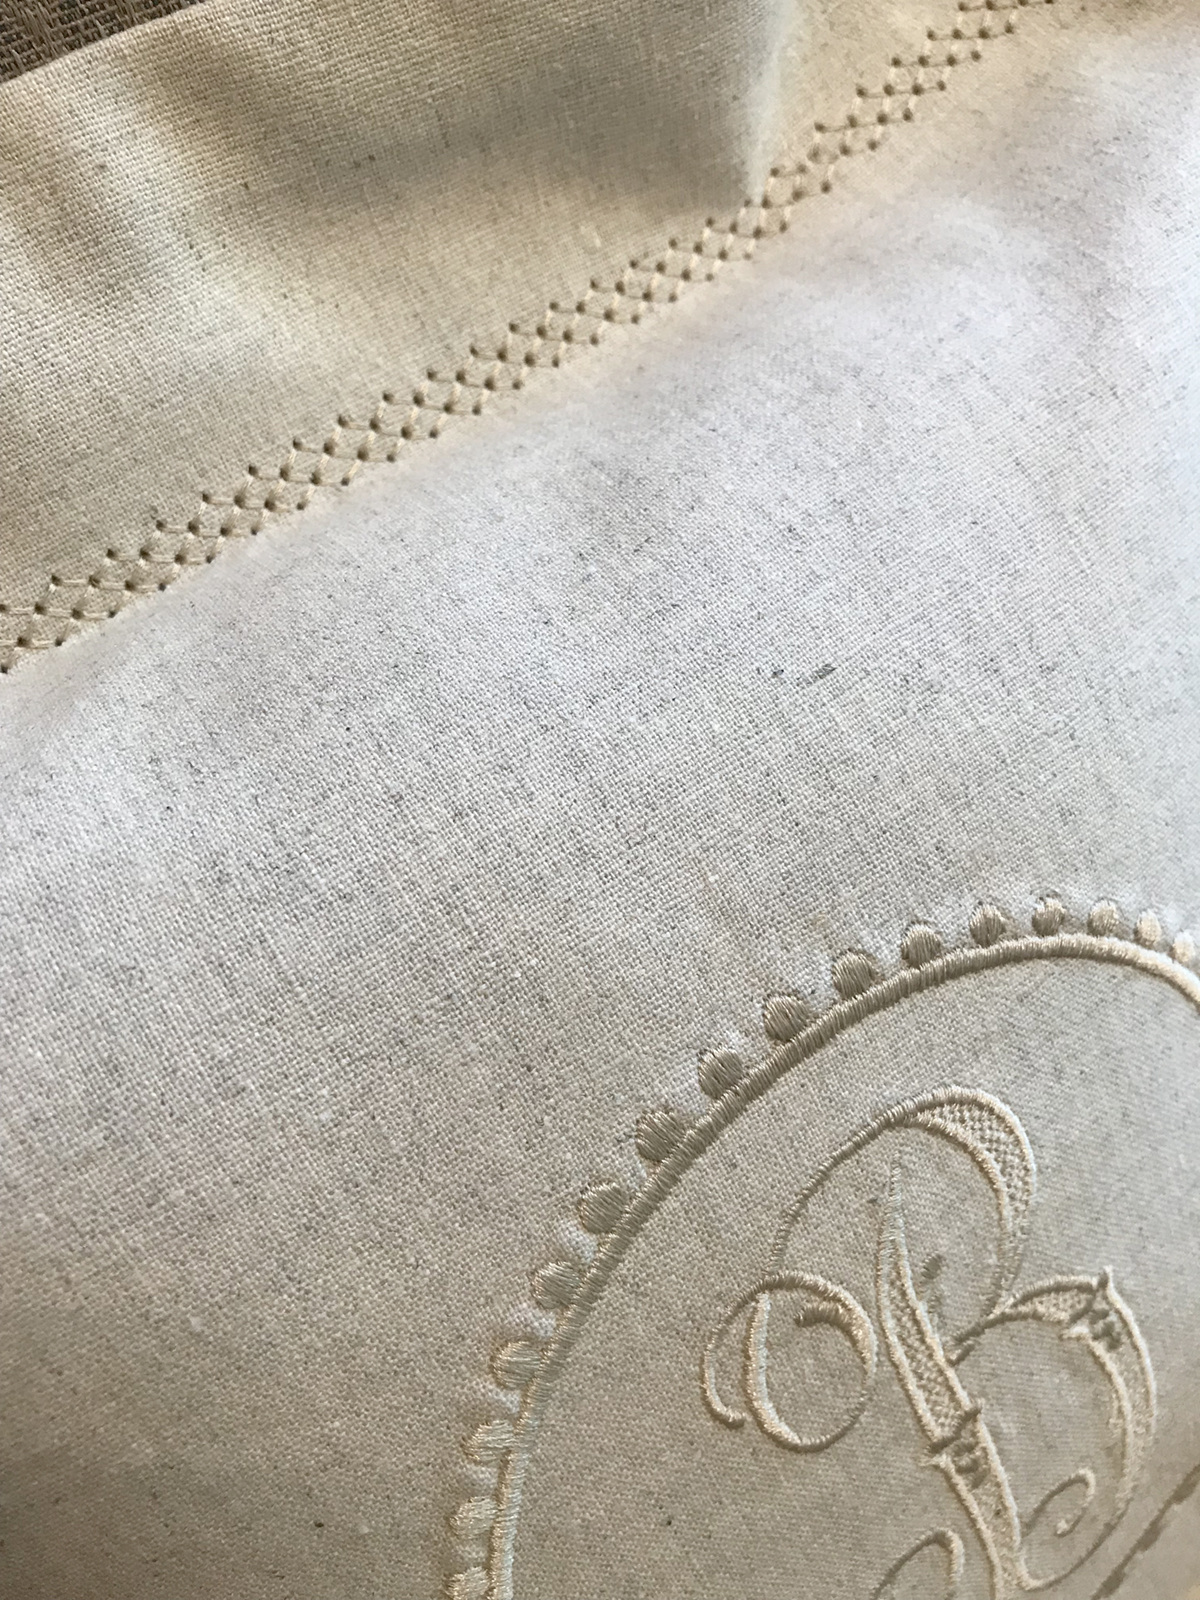 Embroidered Hemstitch Pillow - hemstitch up close